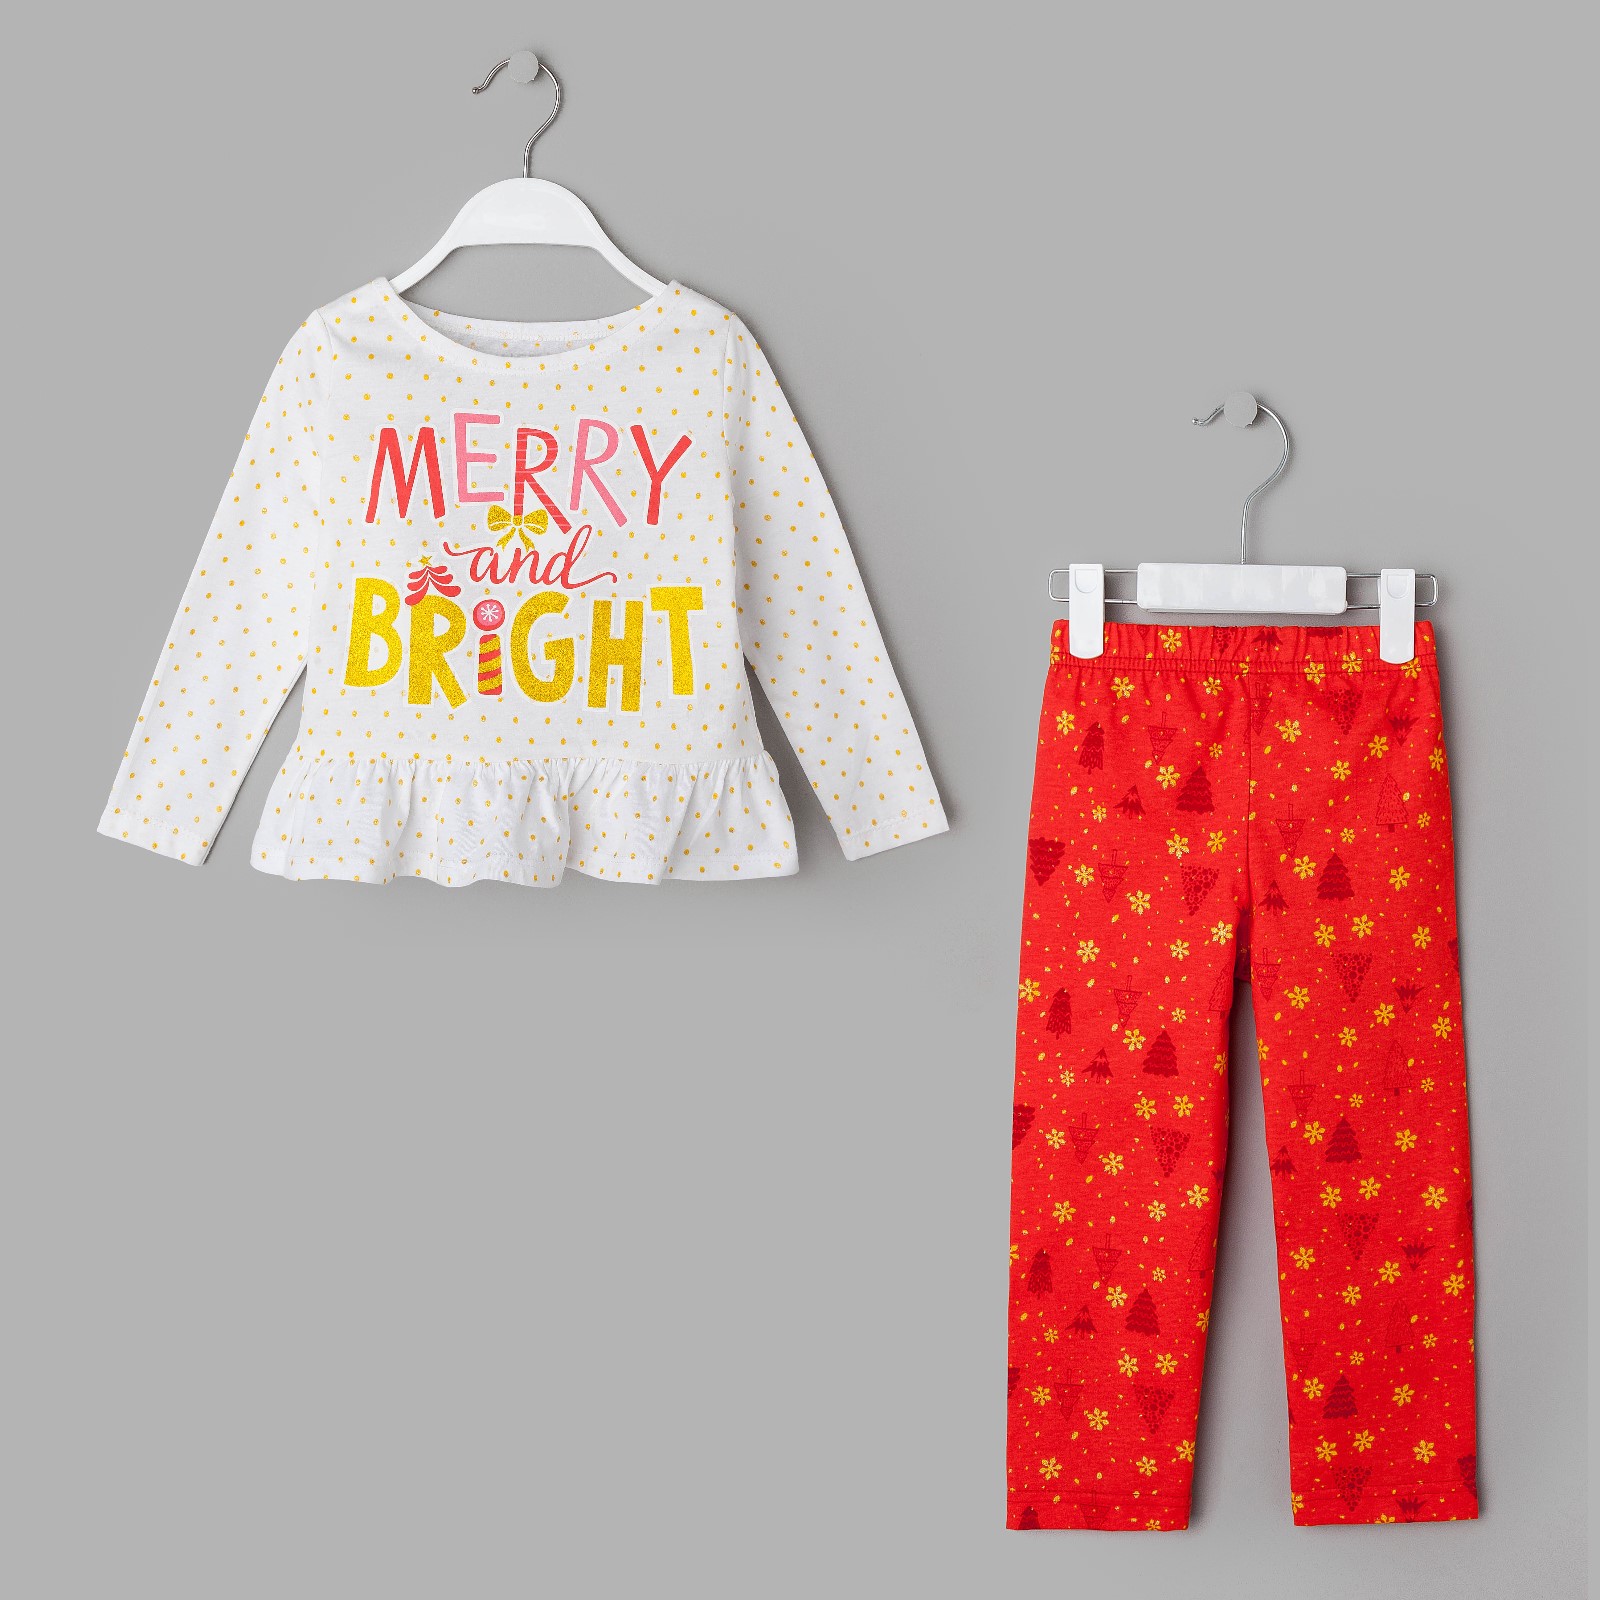 Детская пижама Bright Цвет: Красный, Белый (7-8 лет), размер 7-8 лет kaf595447 Детская пижама Bright Цвет: Красный, Белый (7-8 лет) - фото 1